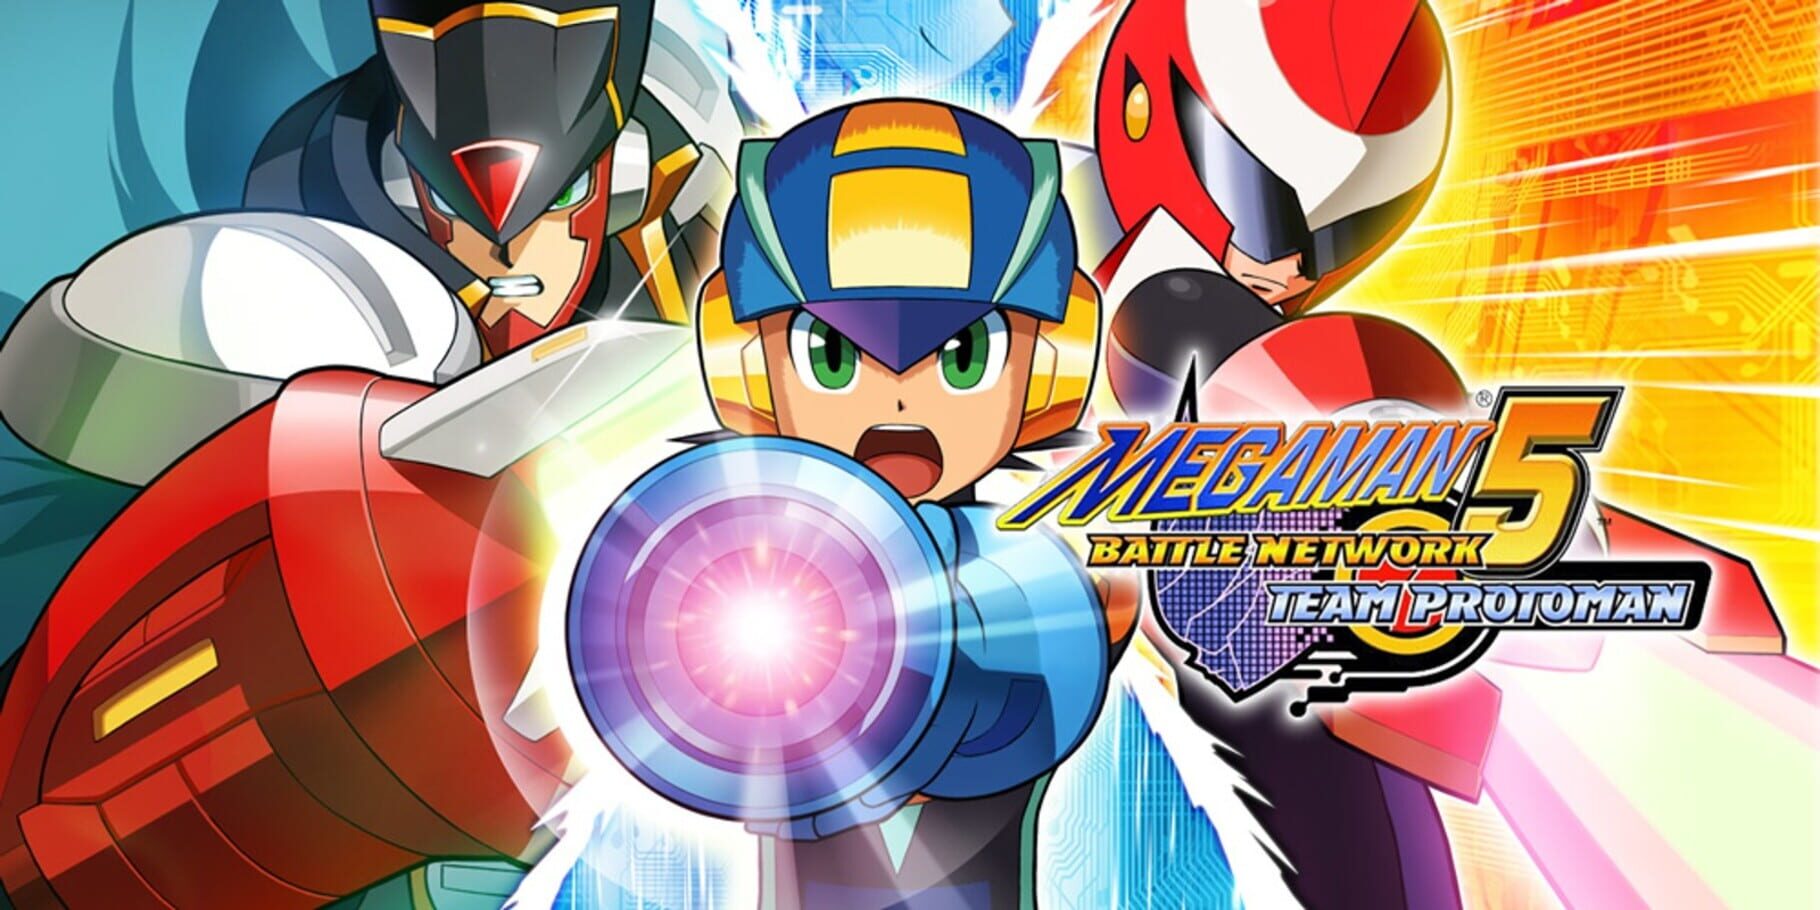 Arte - Mega Man Battle Network 5: Team Protoman